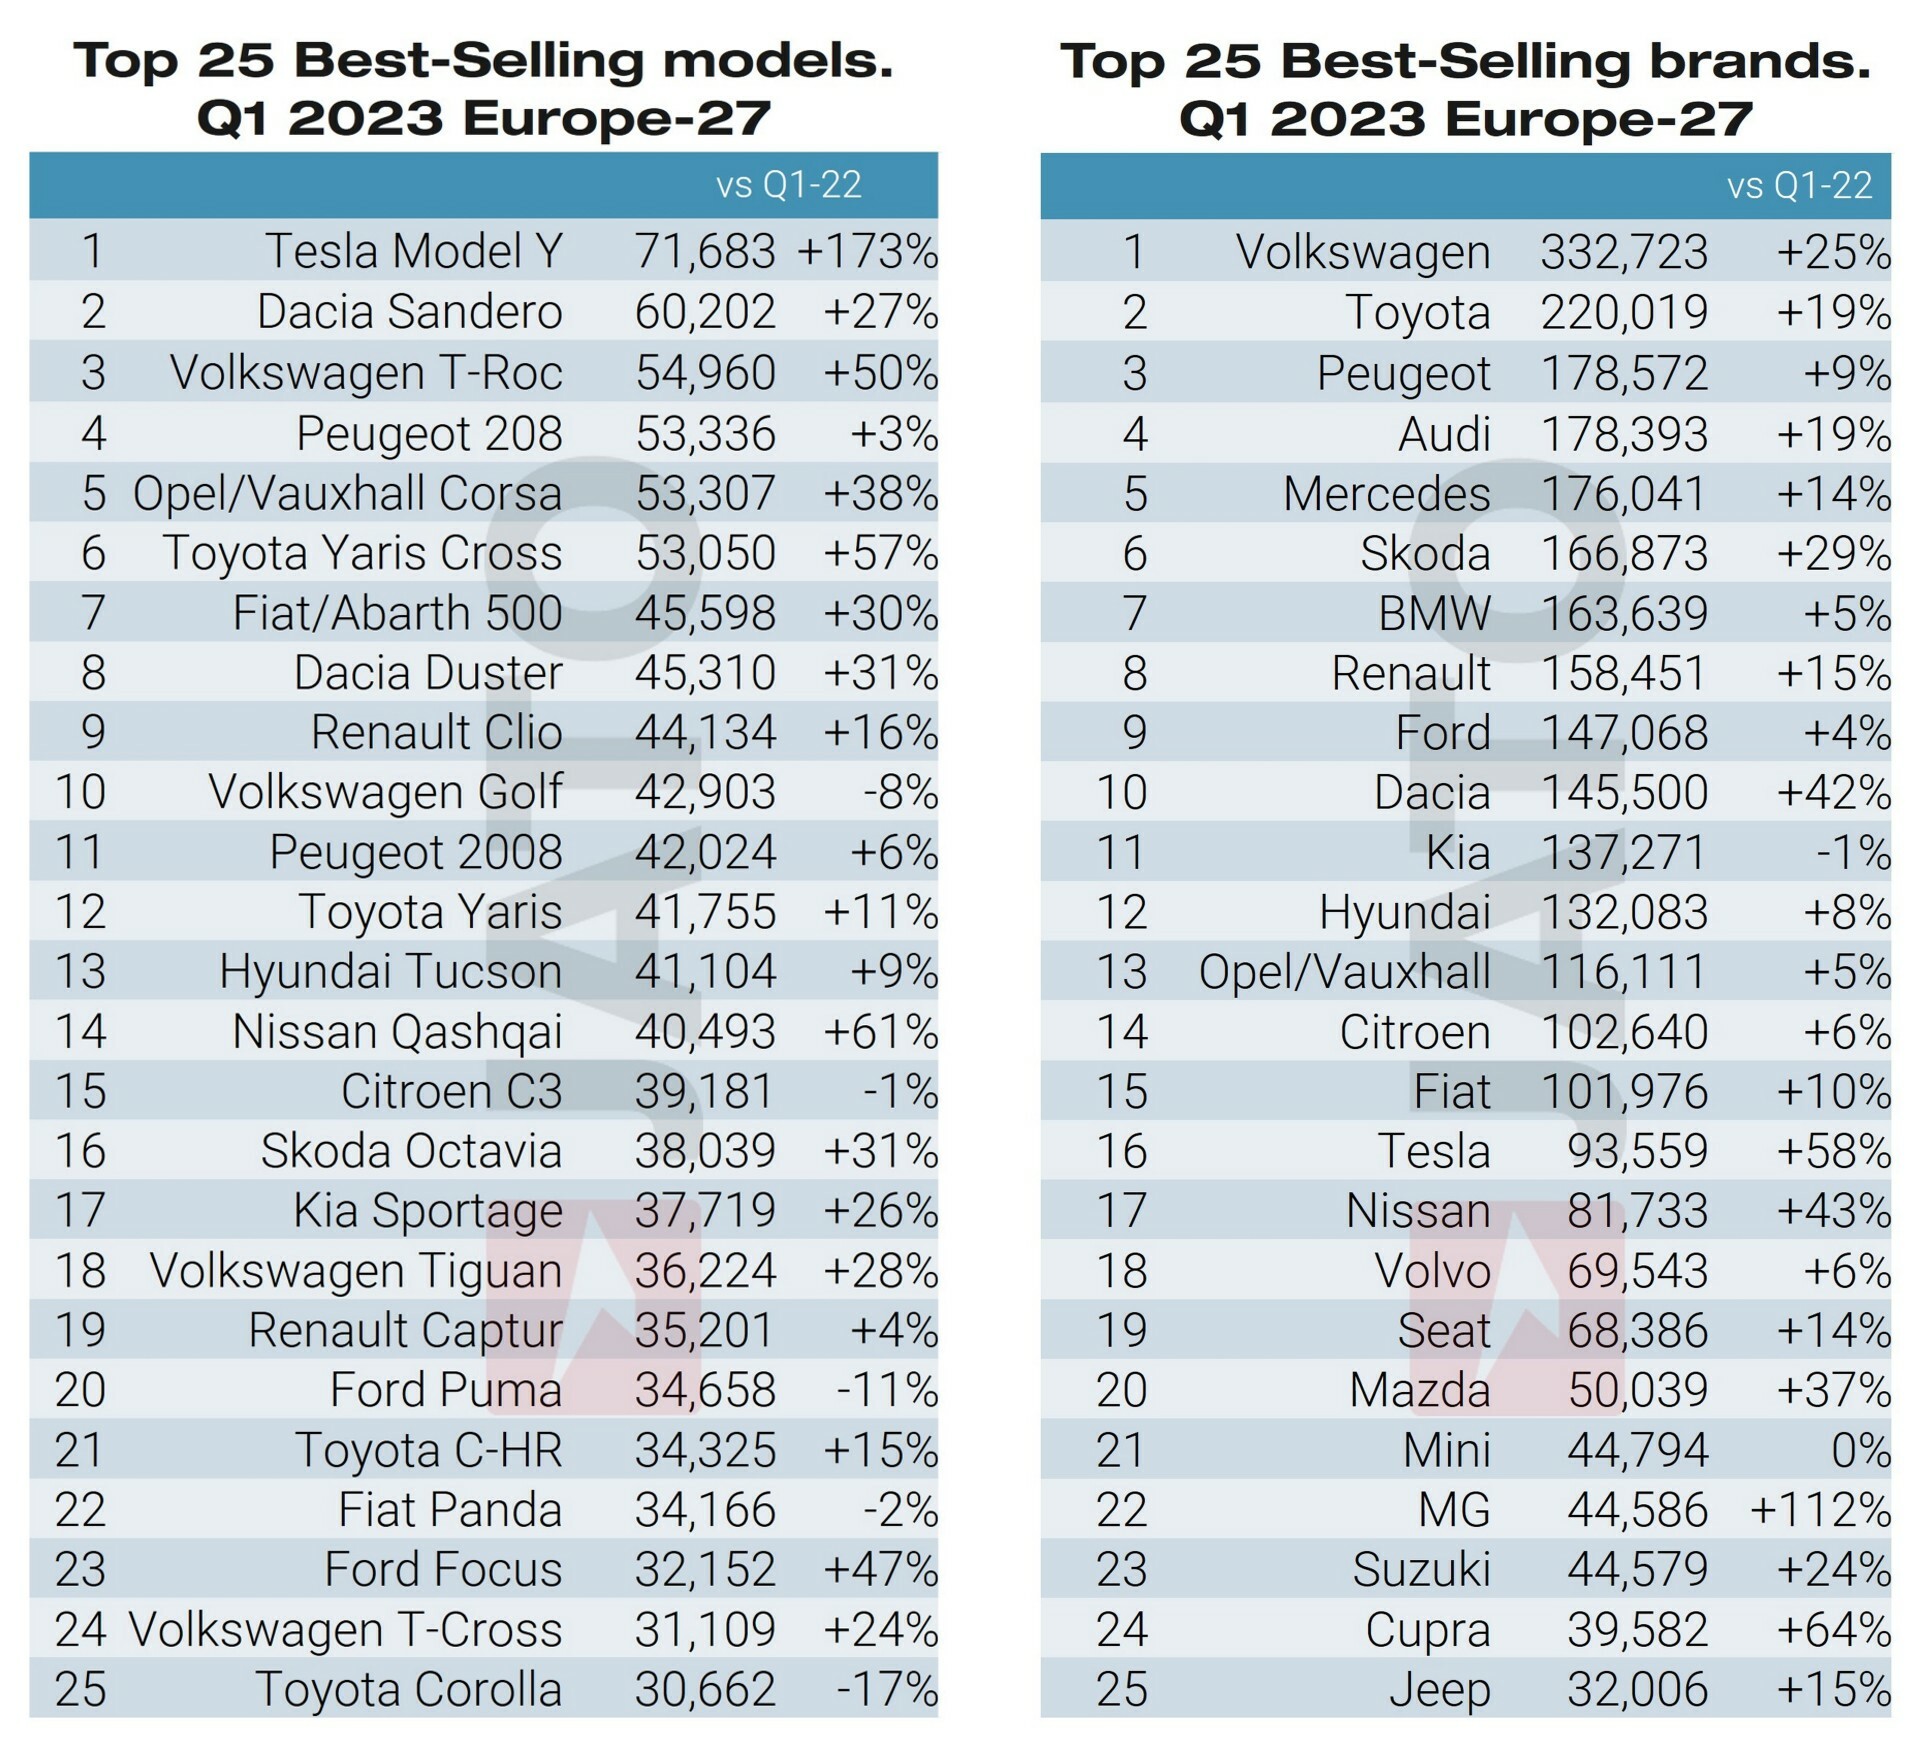 Tesla Model Y is Europe's best-selling car in Q1 2023